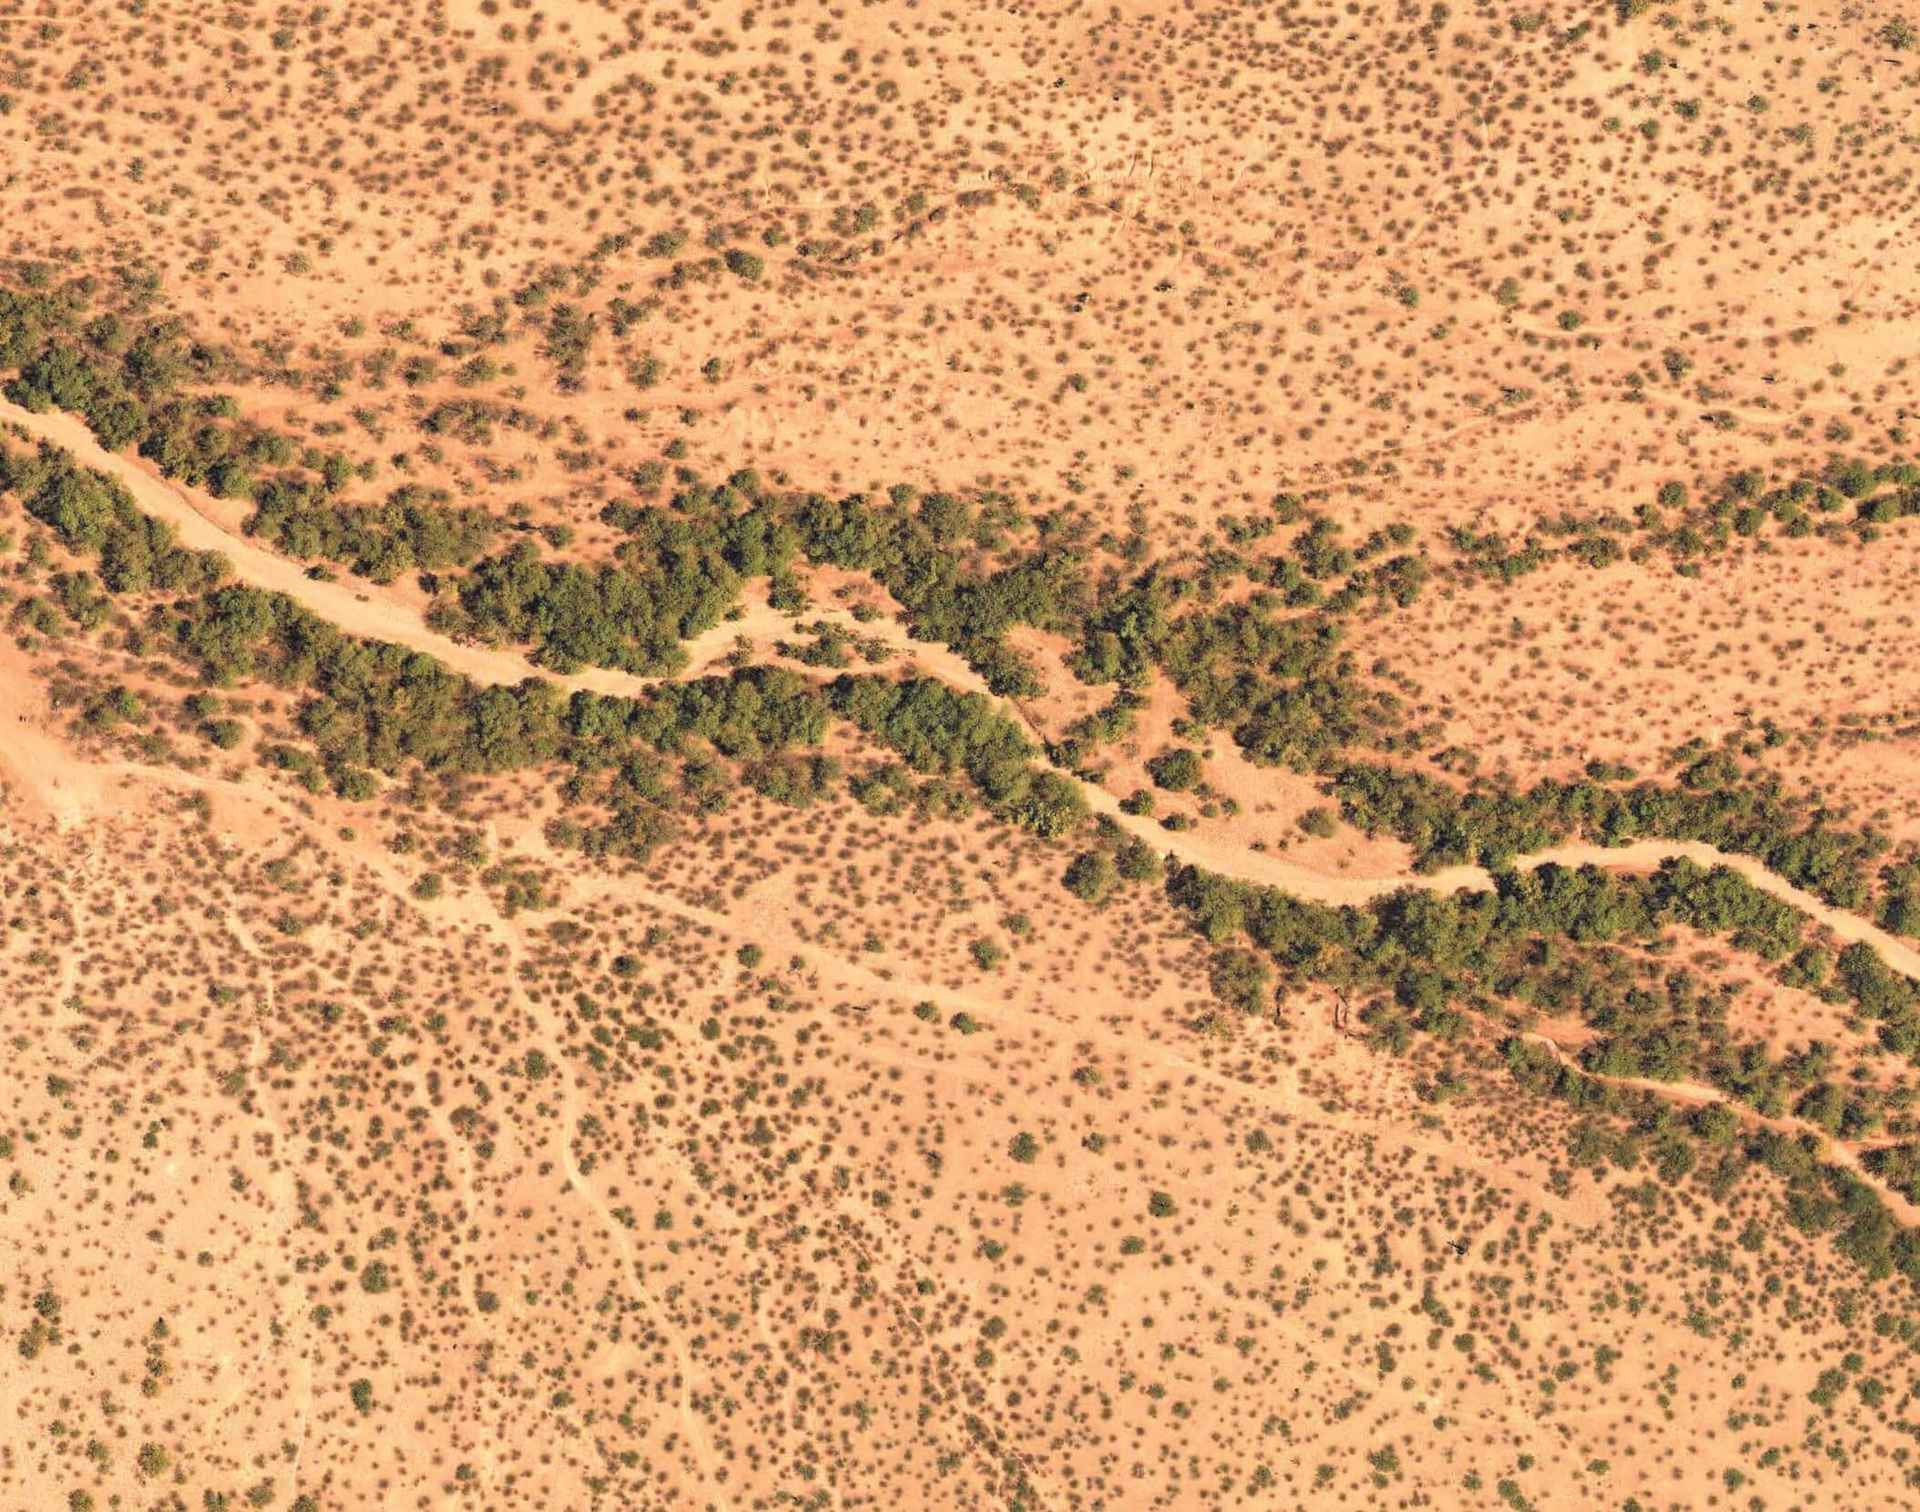 Desert Riparian Area